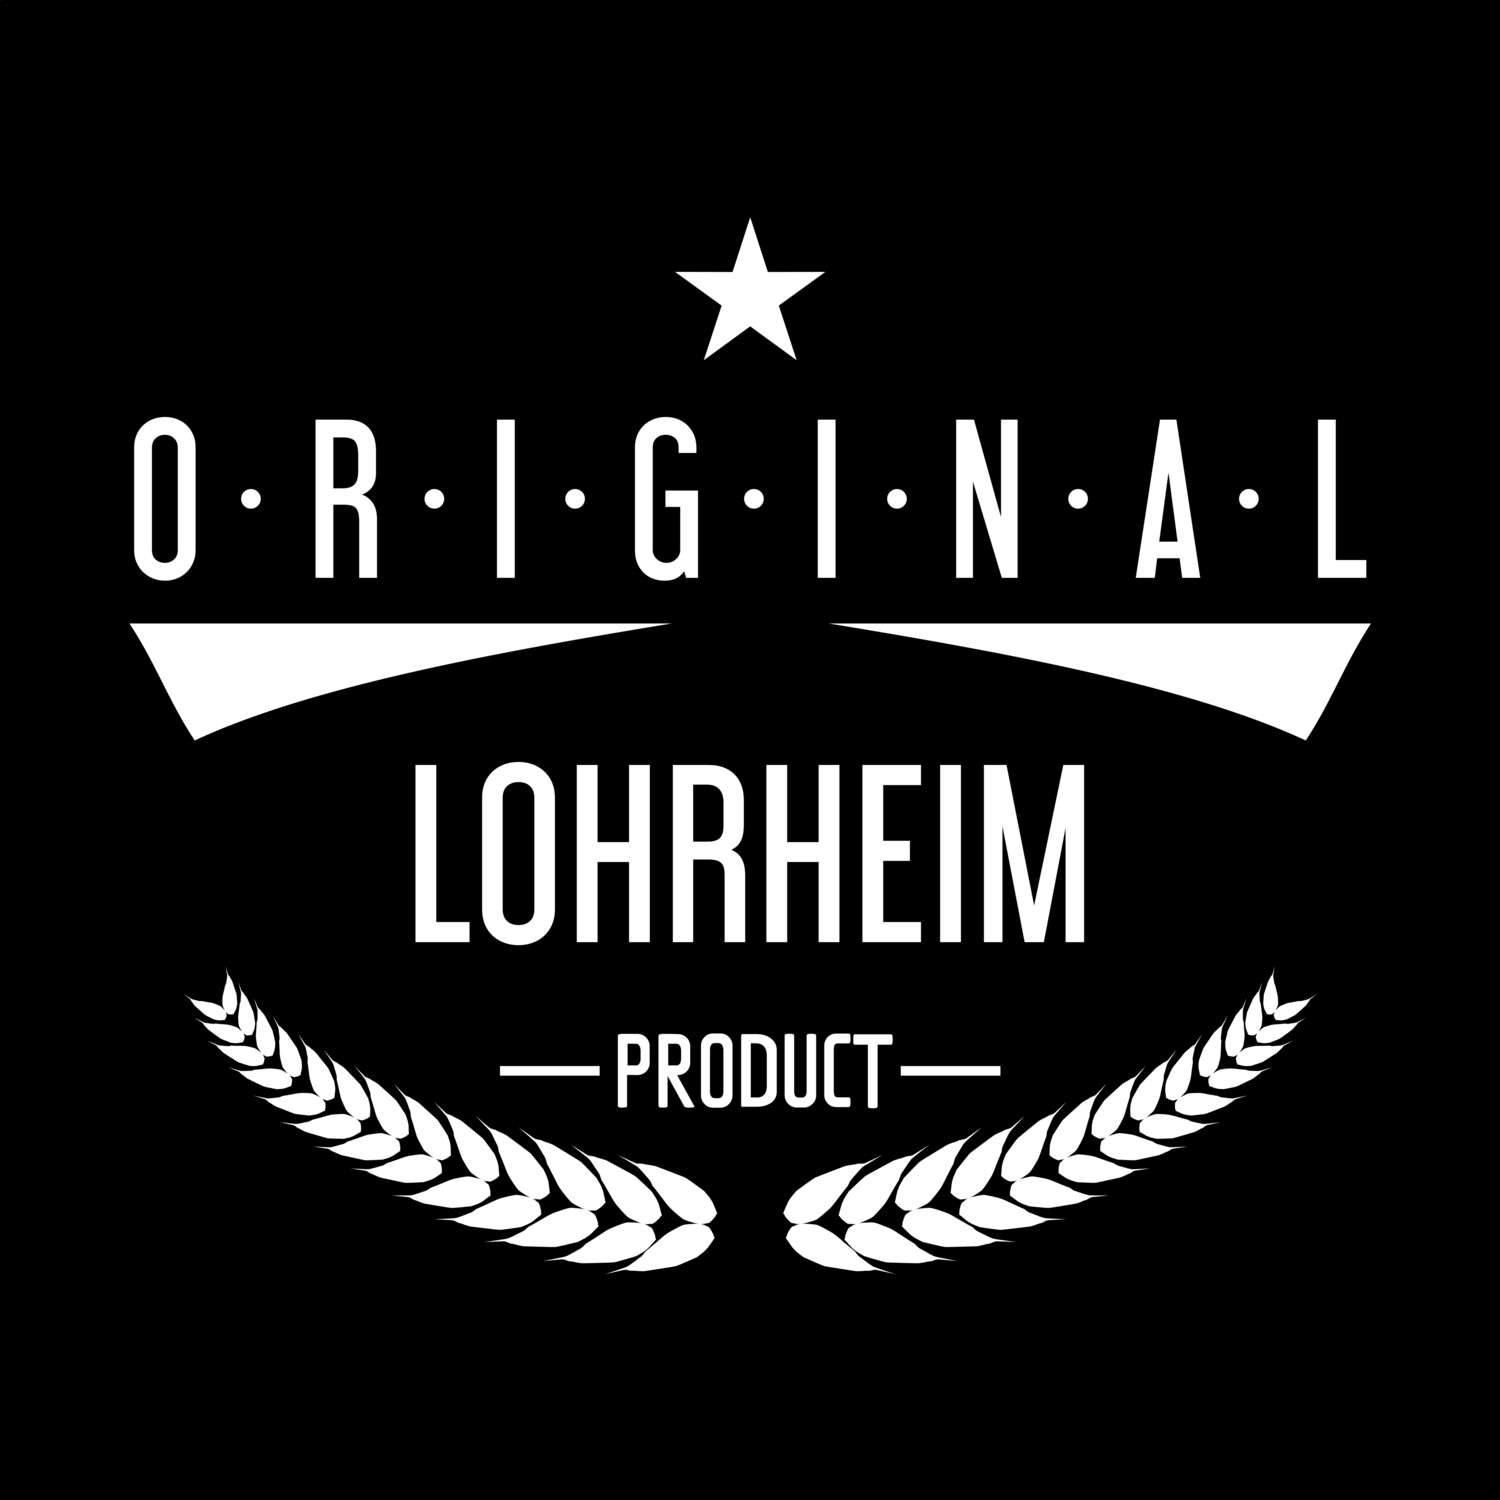 Lohrheim T-Shirt »Original Product«